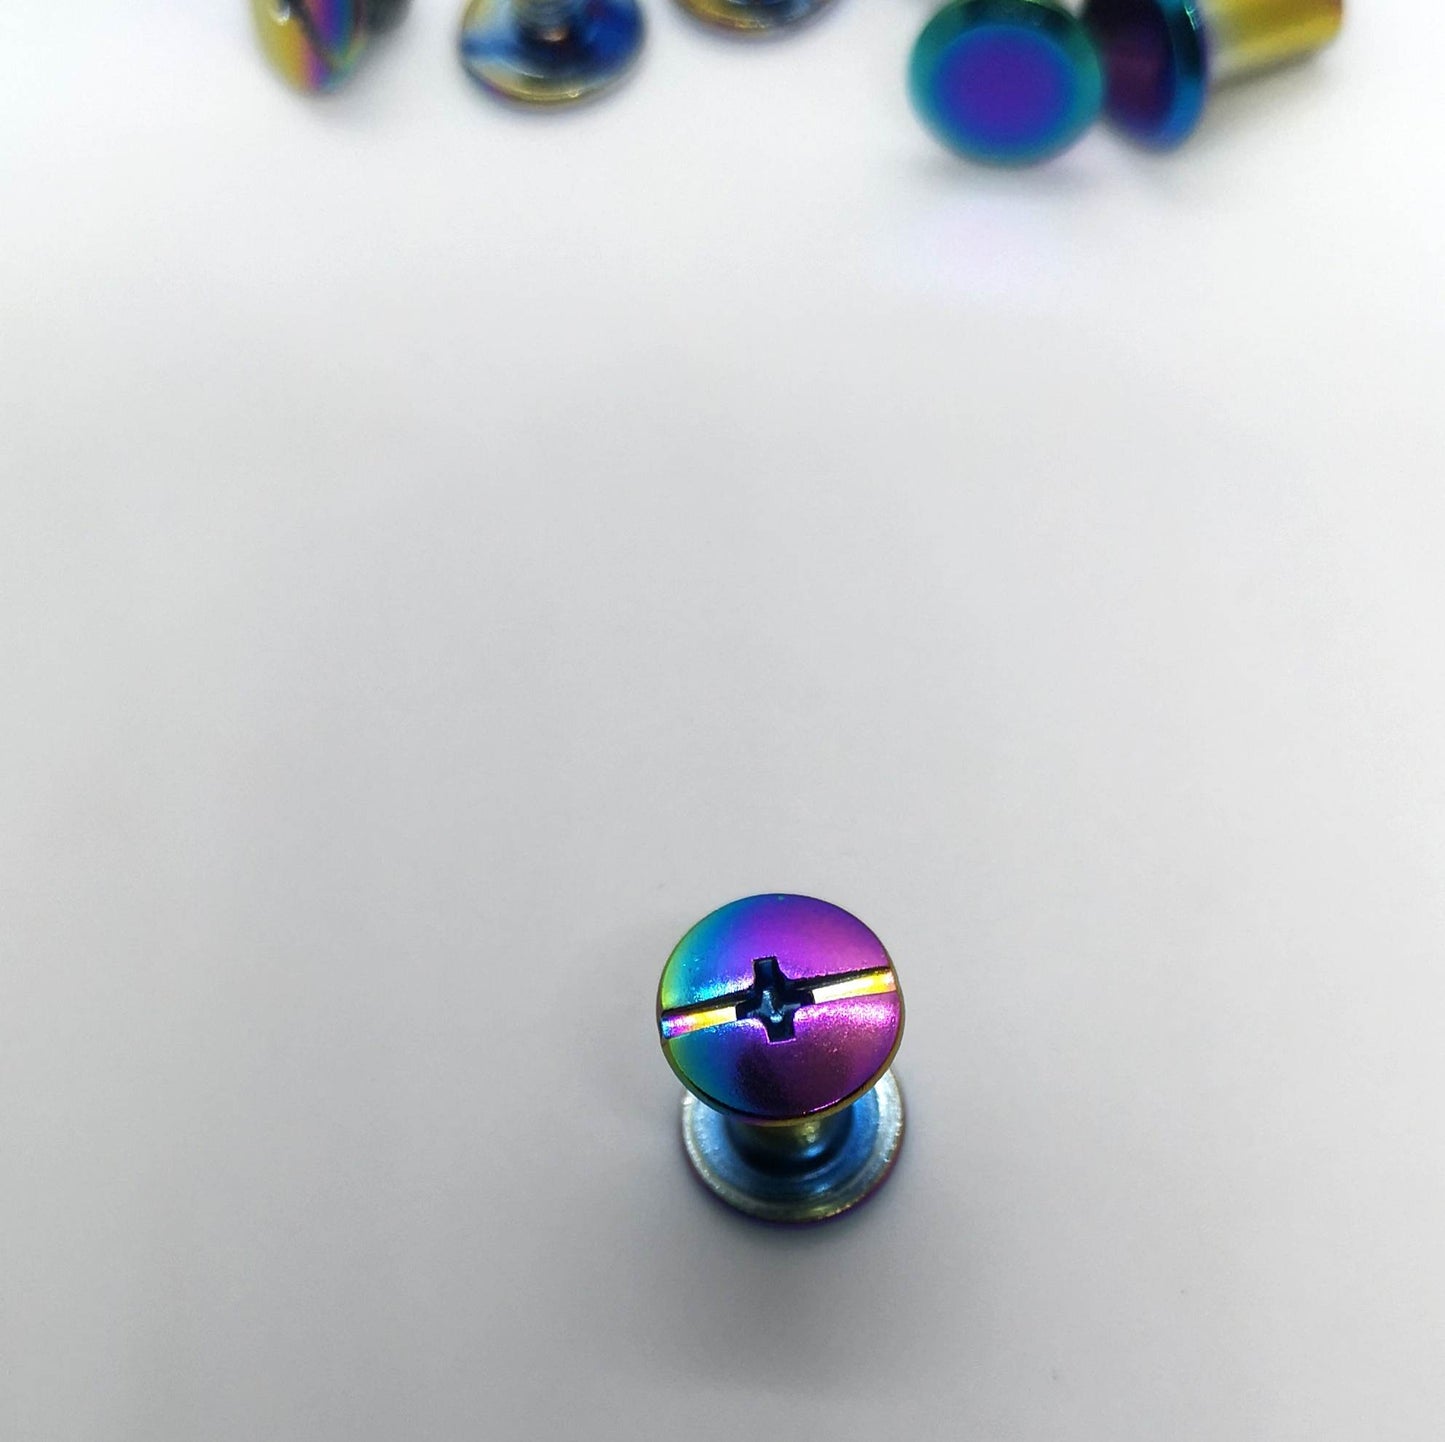 10 x 10 mm screw on Rivets Rainbow set of 10